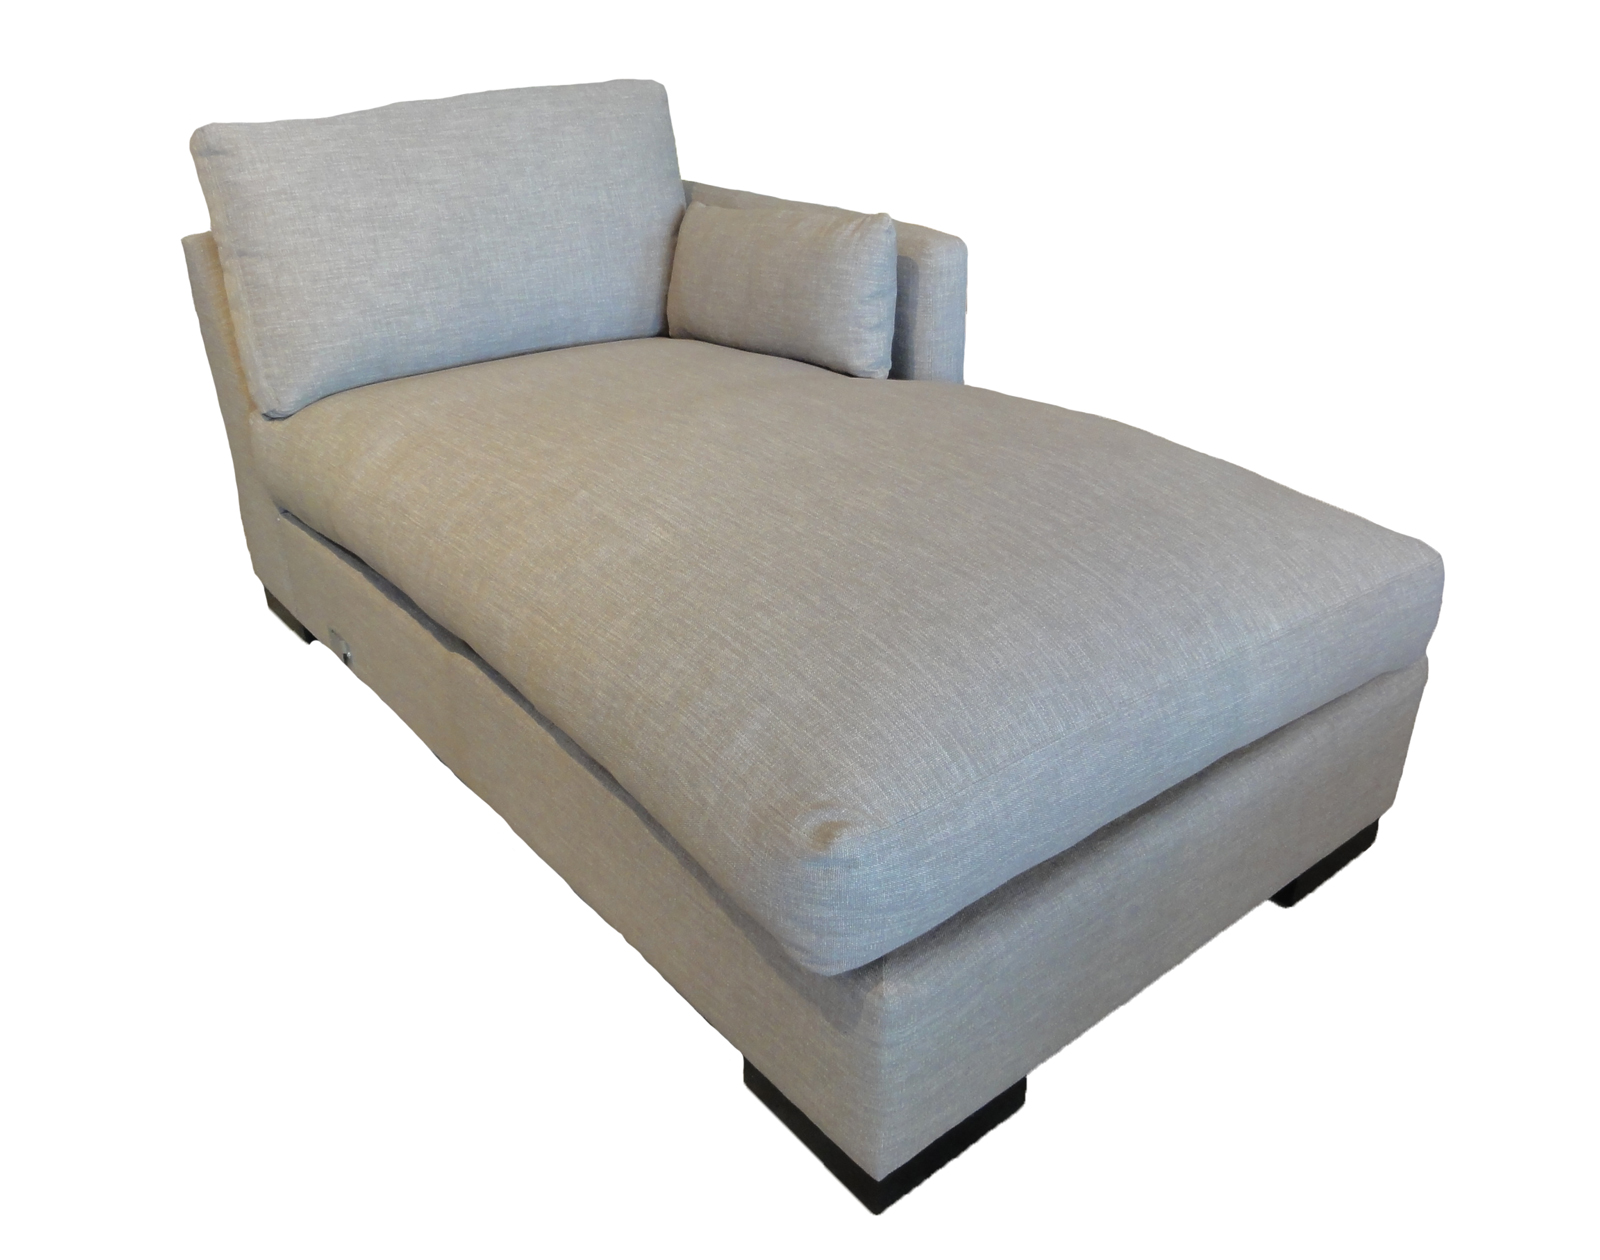 Sarah chaise santa barbara design center sofa loveseat sectional couch rugs